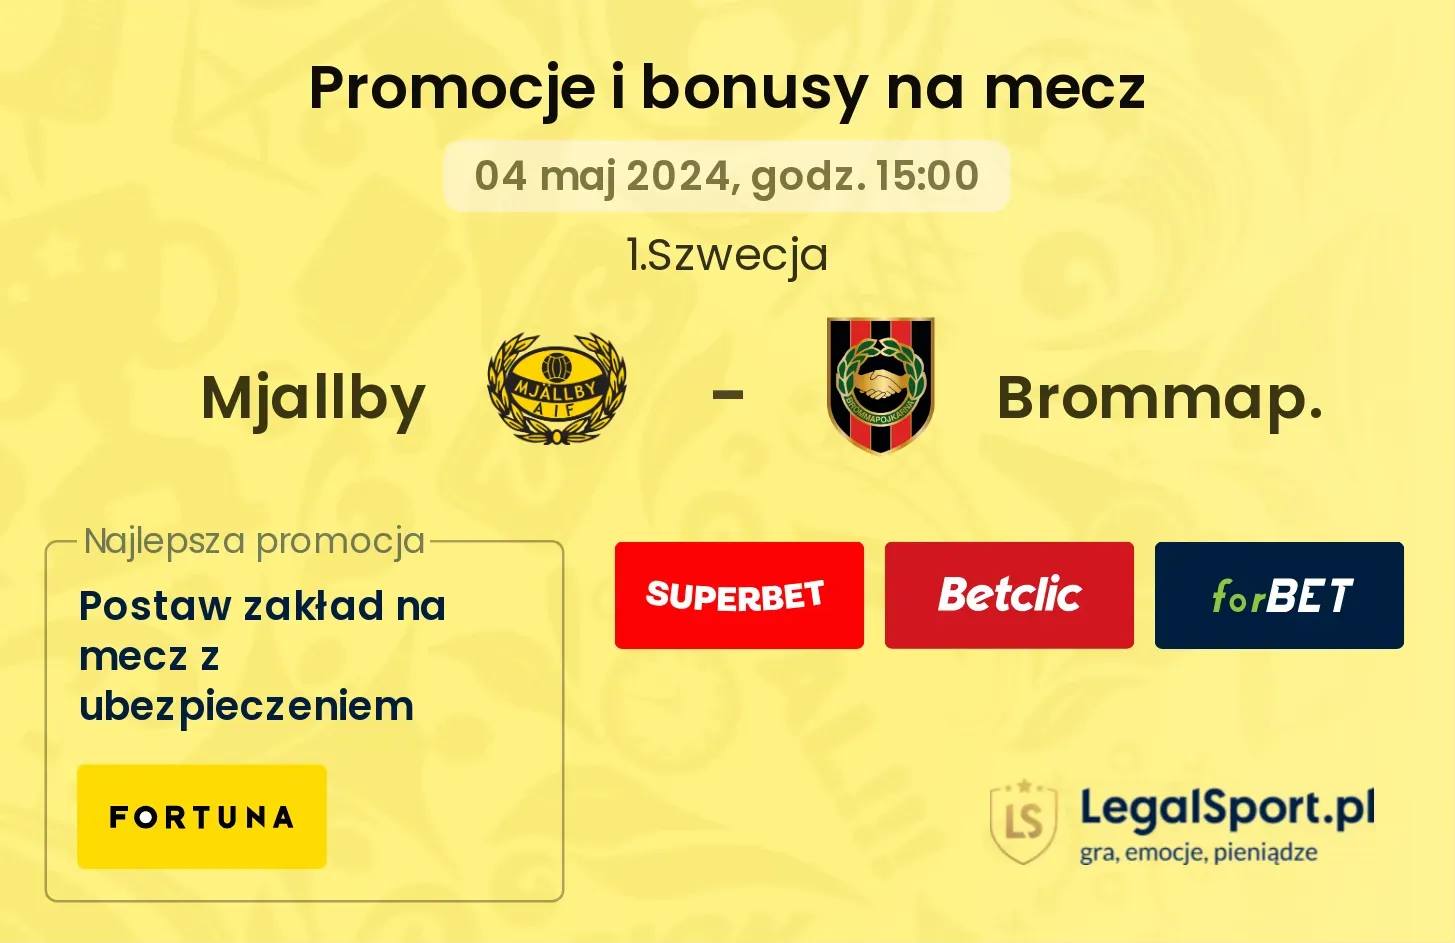 Mjallby - Brommap. promocje bonusy na mecz